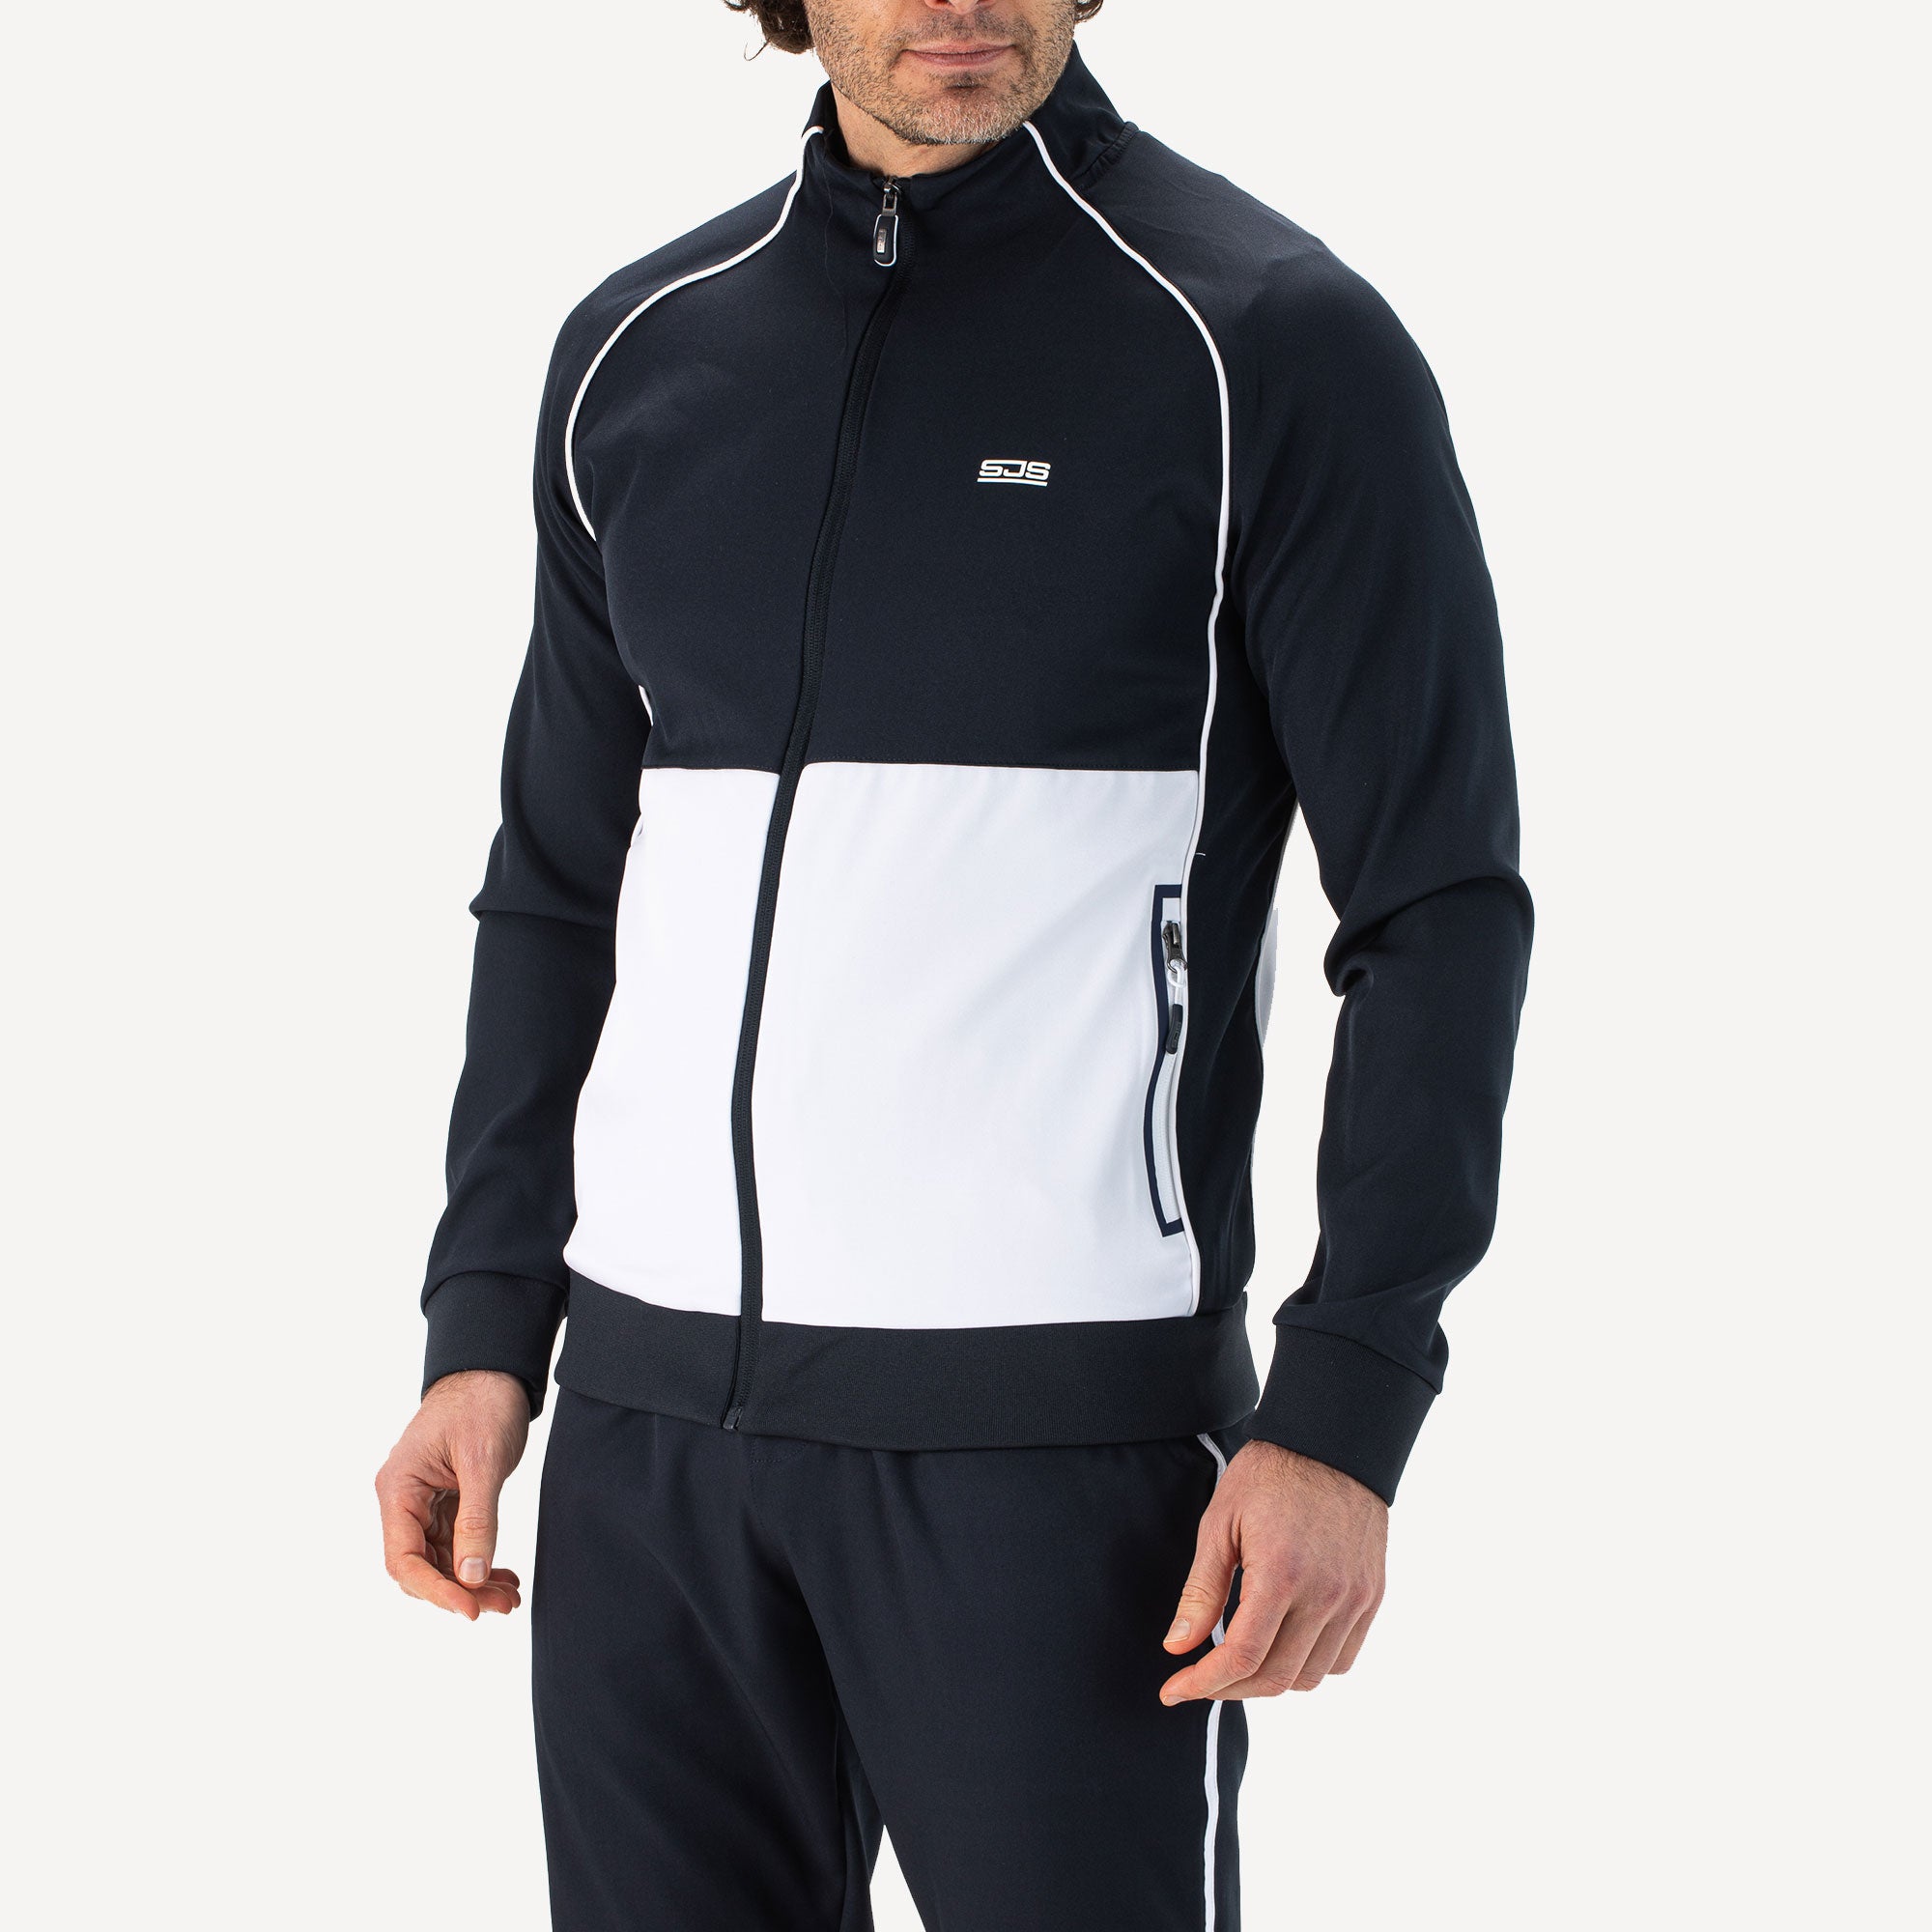 Sjeng Sports Arley Men's Woven Tennis Jacket - White (1)